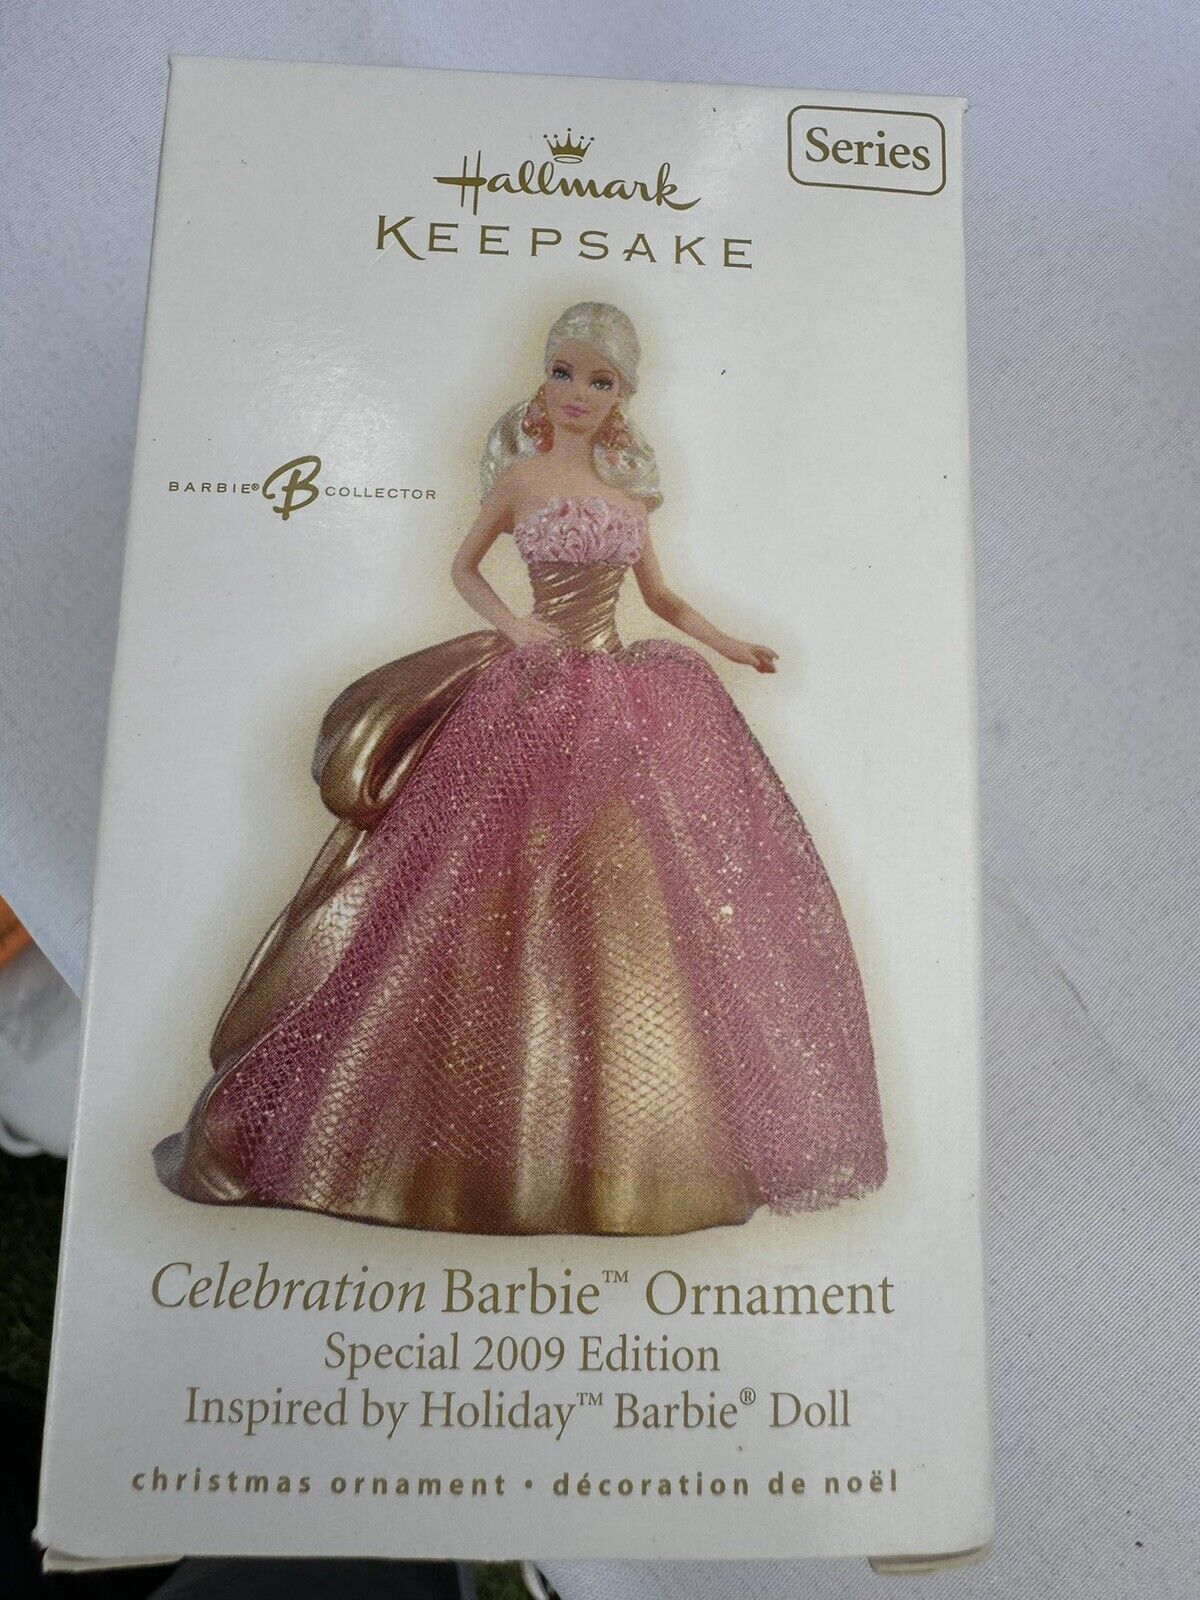 2009 Hallmark Keepsake Series Celebration Barbie Ornament 10th in Series